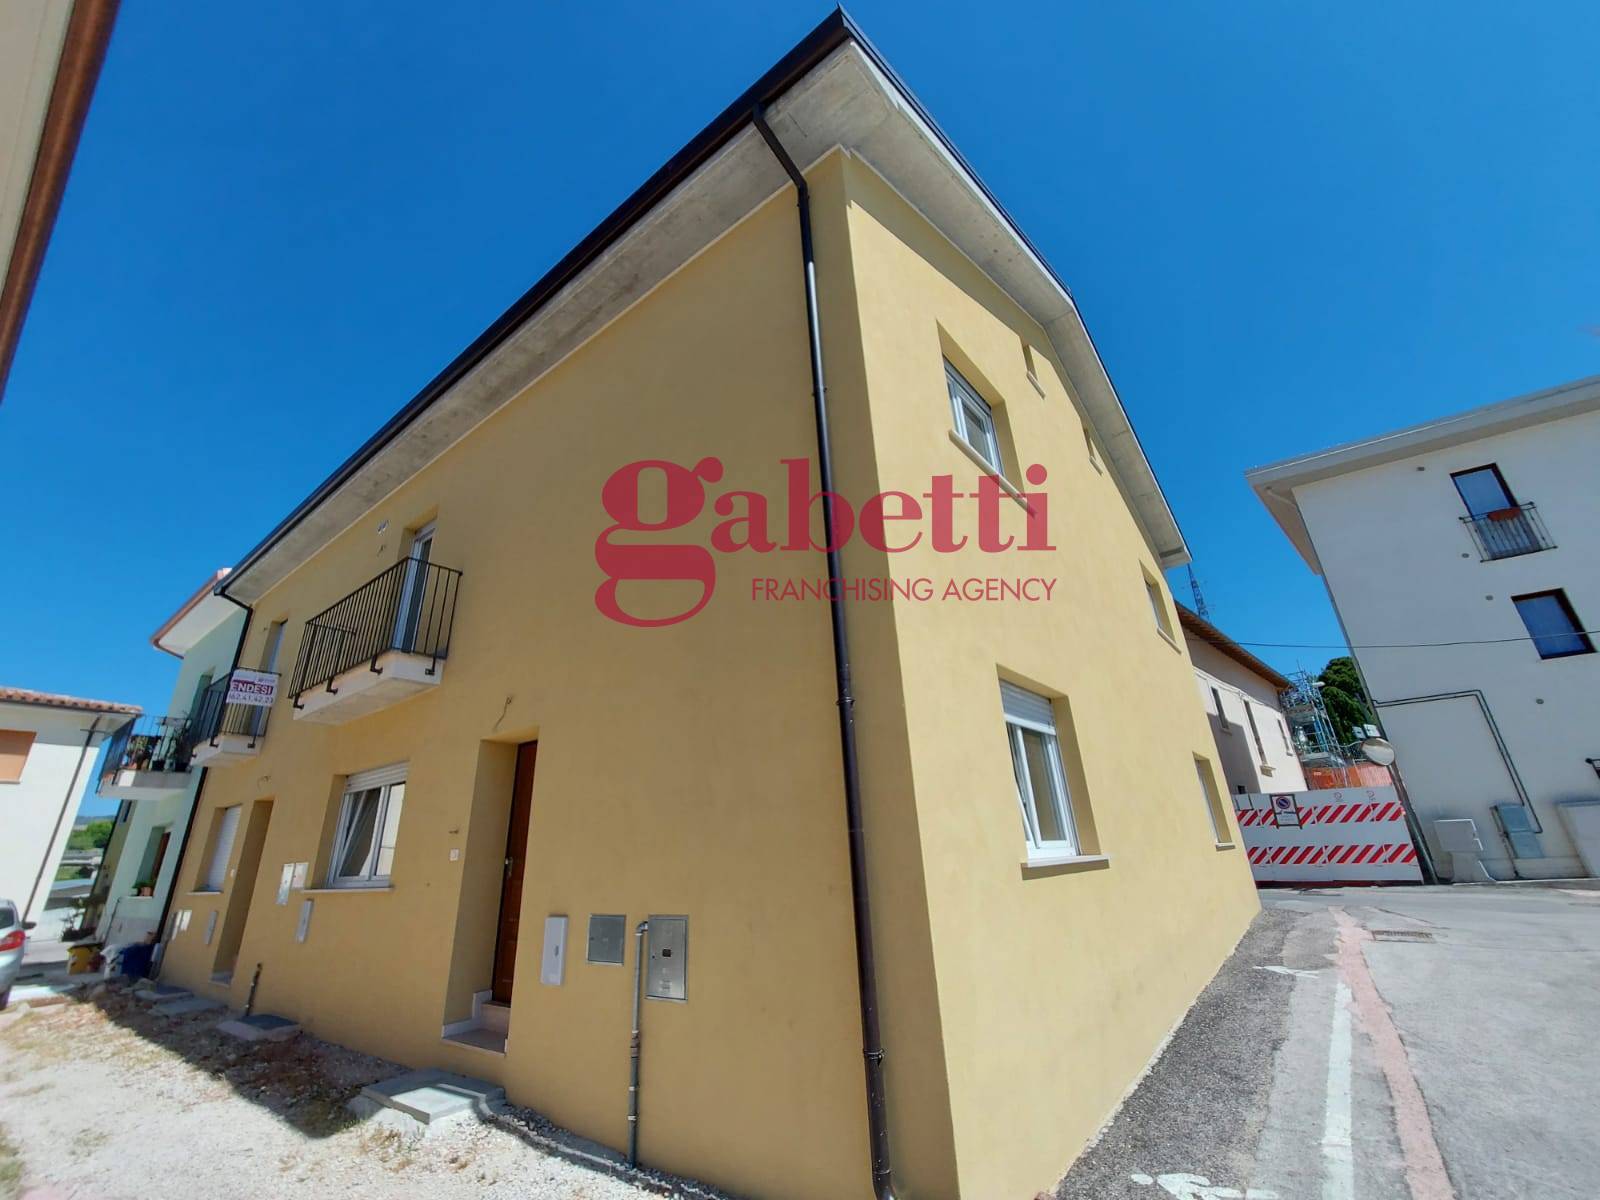 Porzione di casa in vendita a Gignano, L'aquila (AQ)